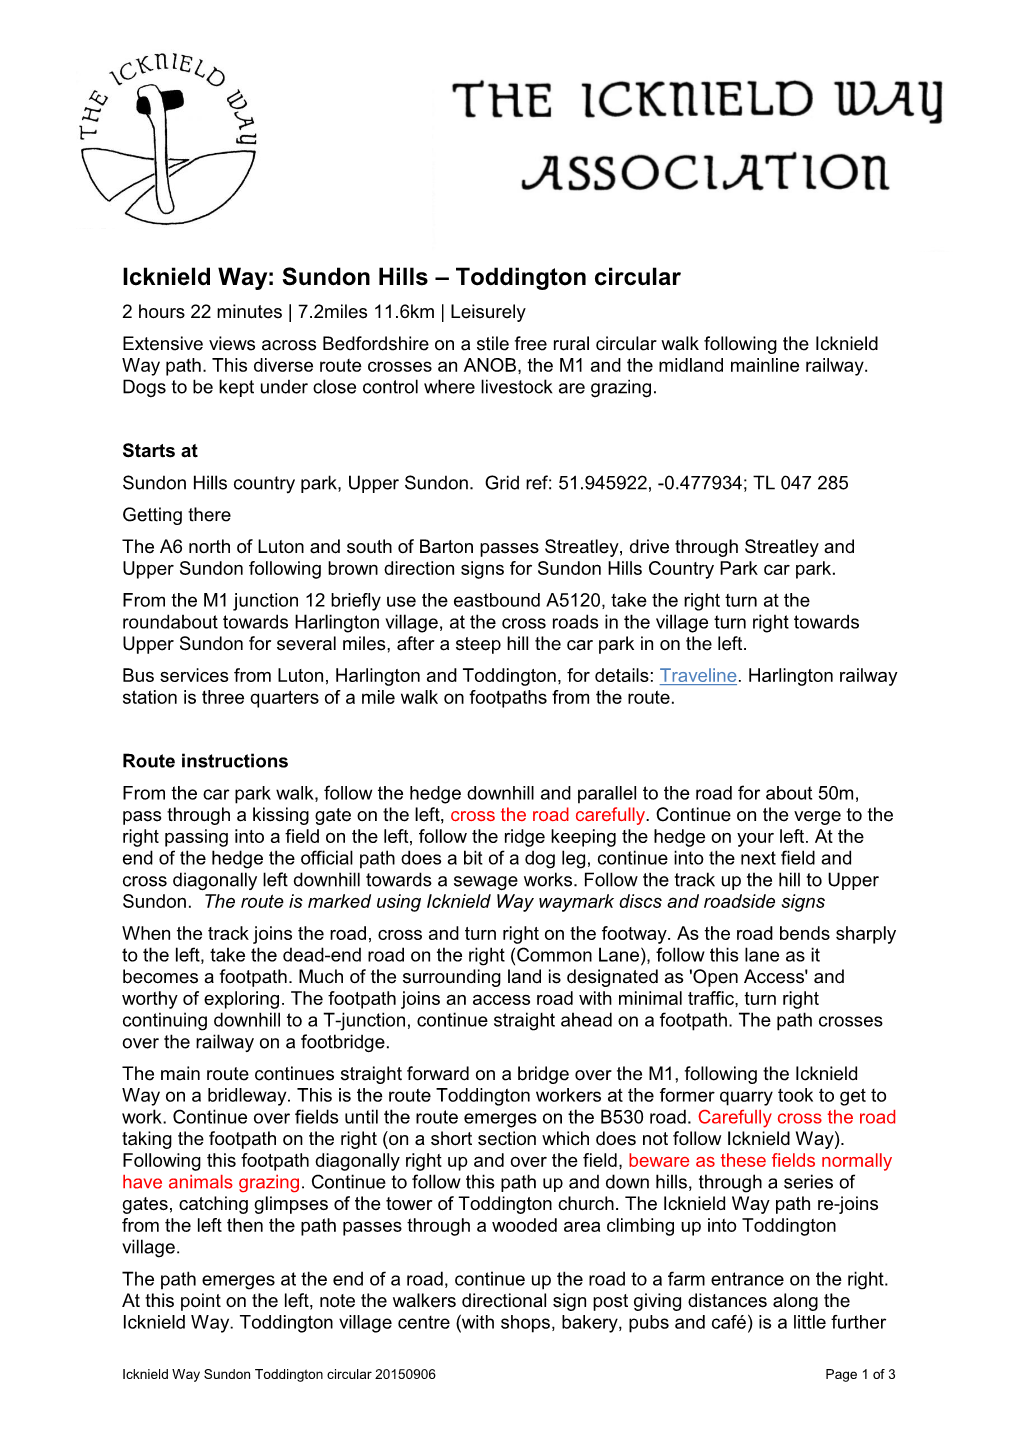 Icknield Way: Sundon Hills – Toddington Circular